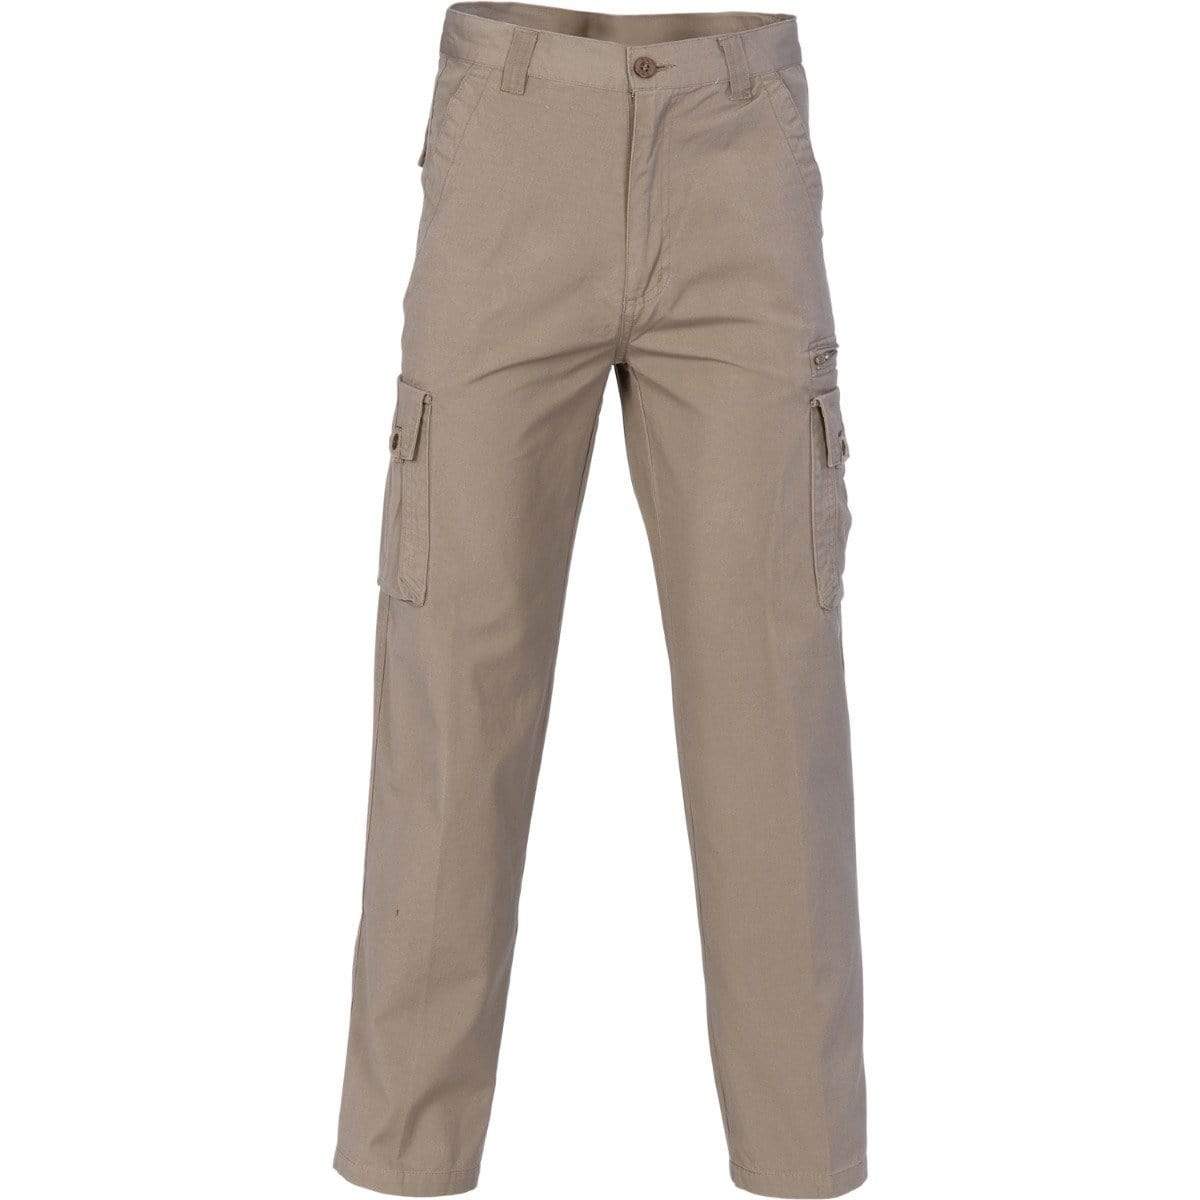 DNC Workwear Work Wear DNC WORKWEAR Island Cotton Duck Weave Cargo Pants 4535